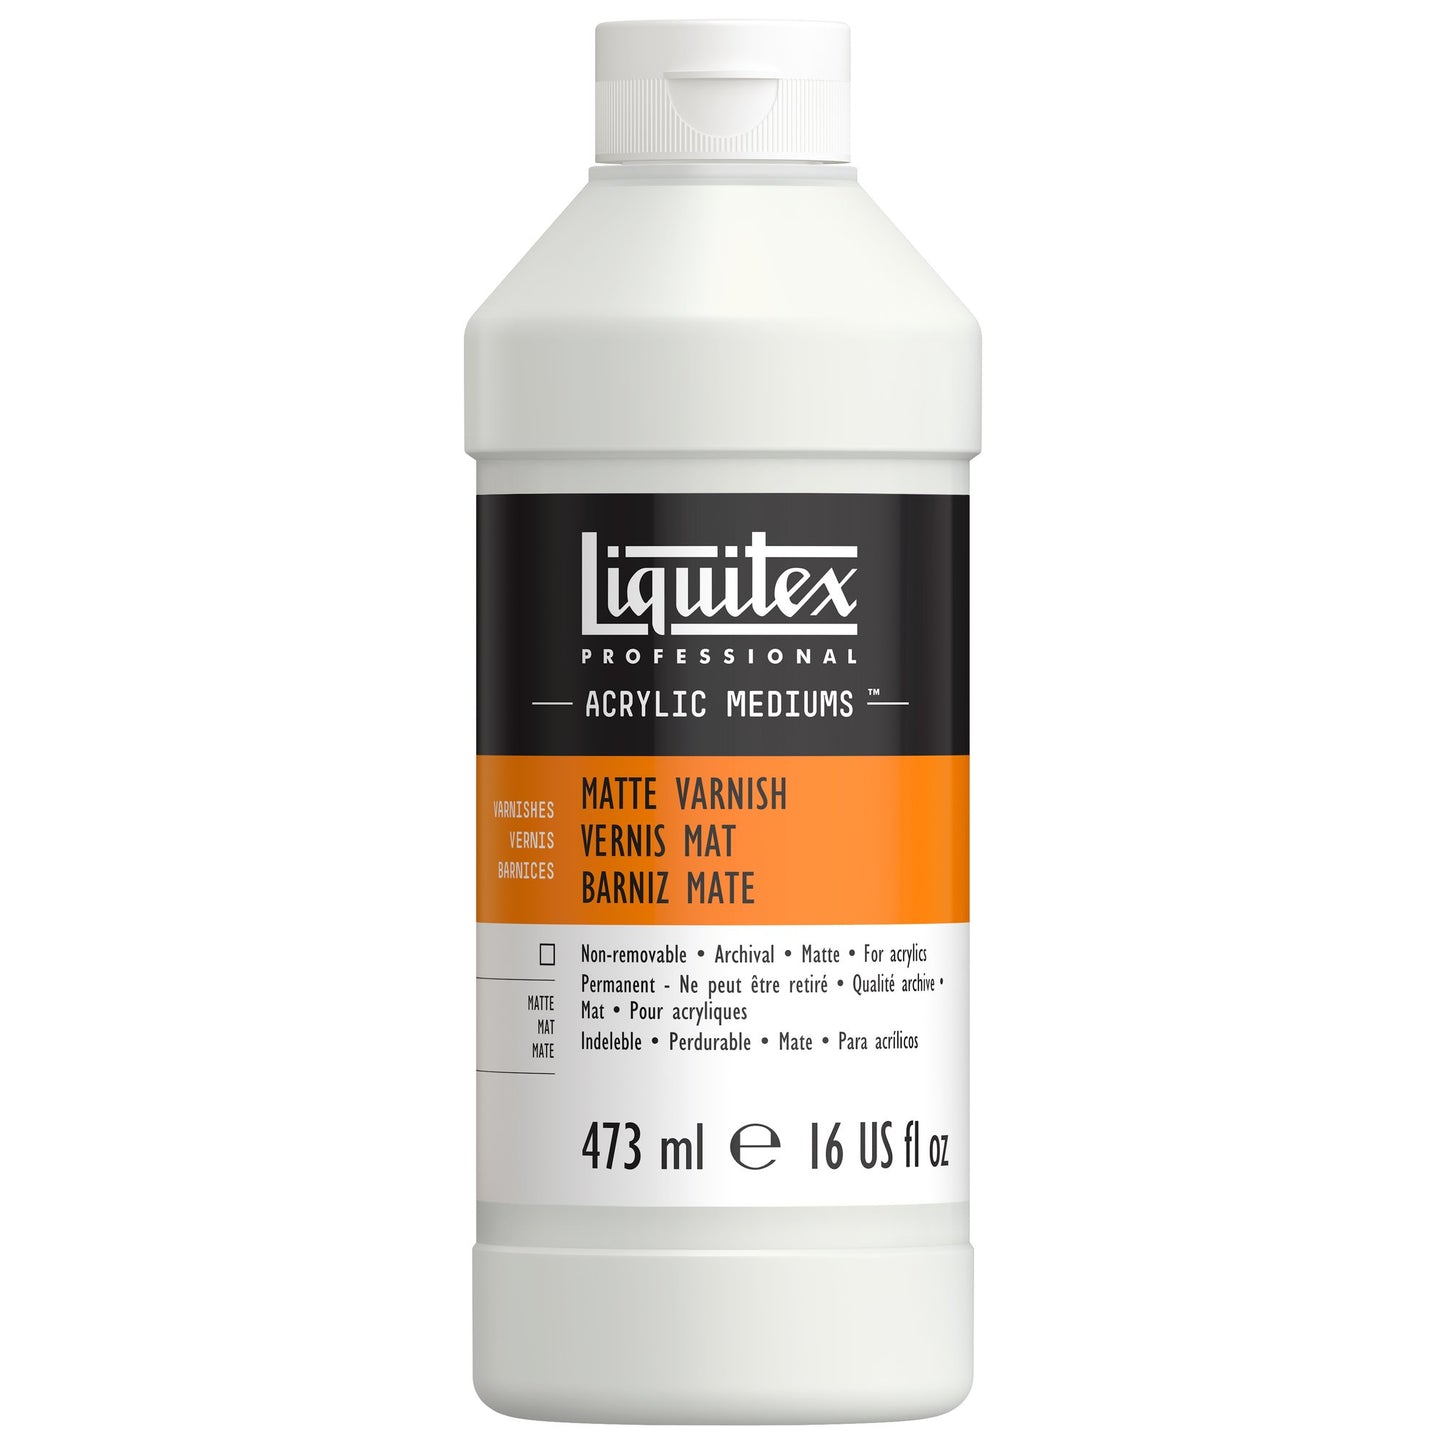 Liquitex Professional Acrylic Additive, 237ml Bottle